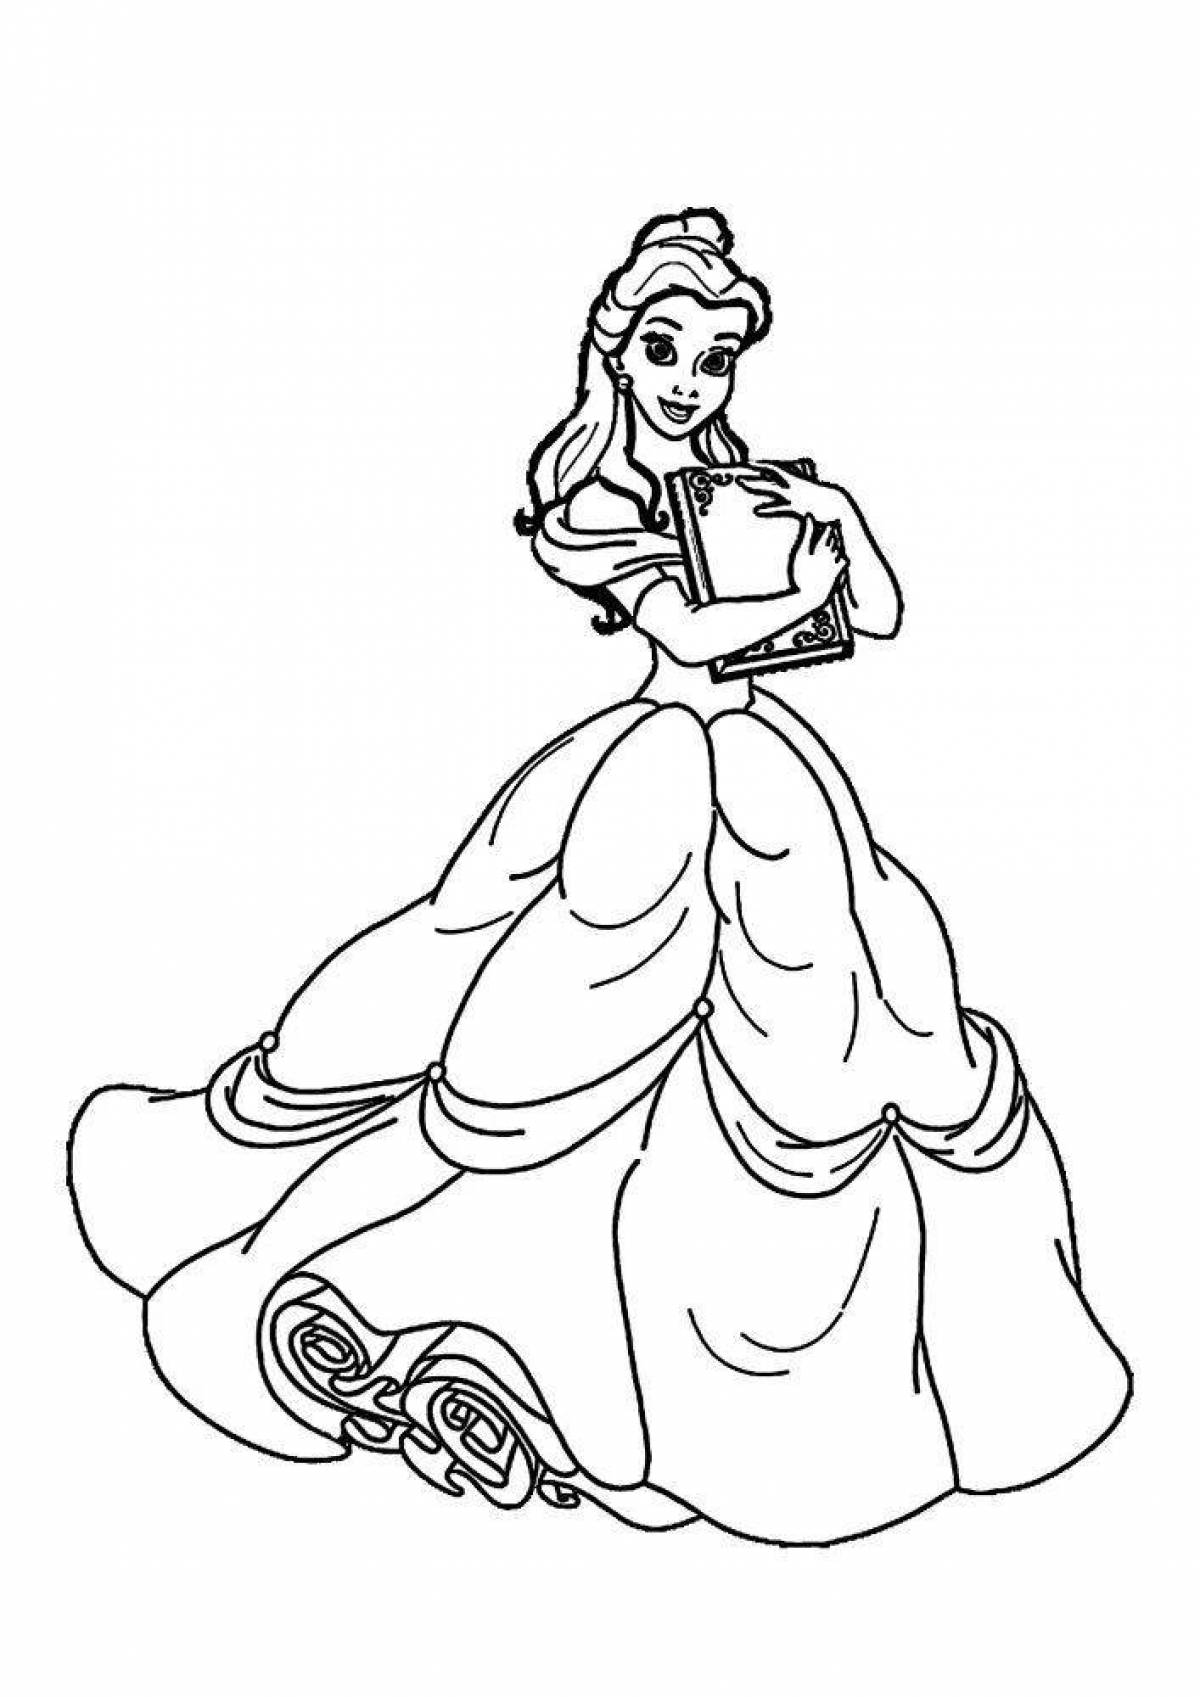 Coloring page elegant princess belle